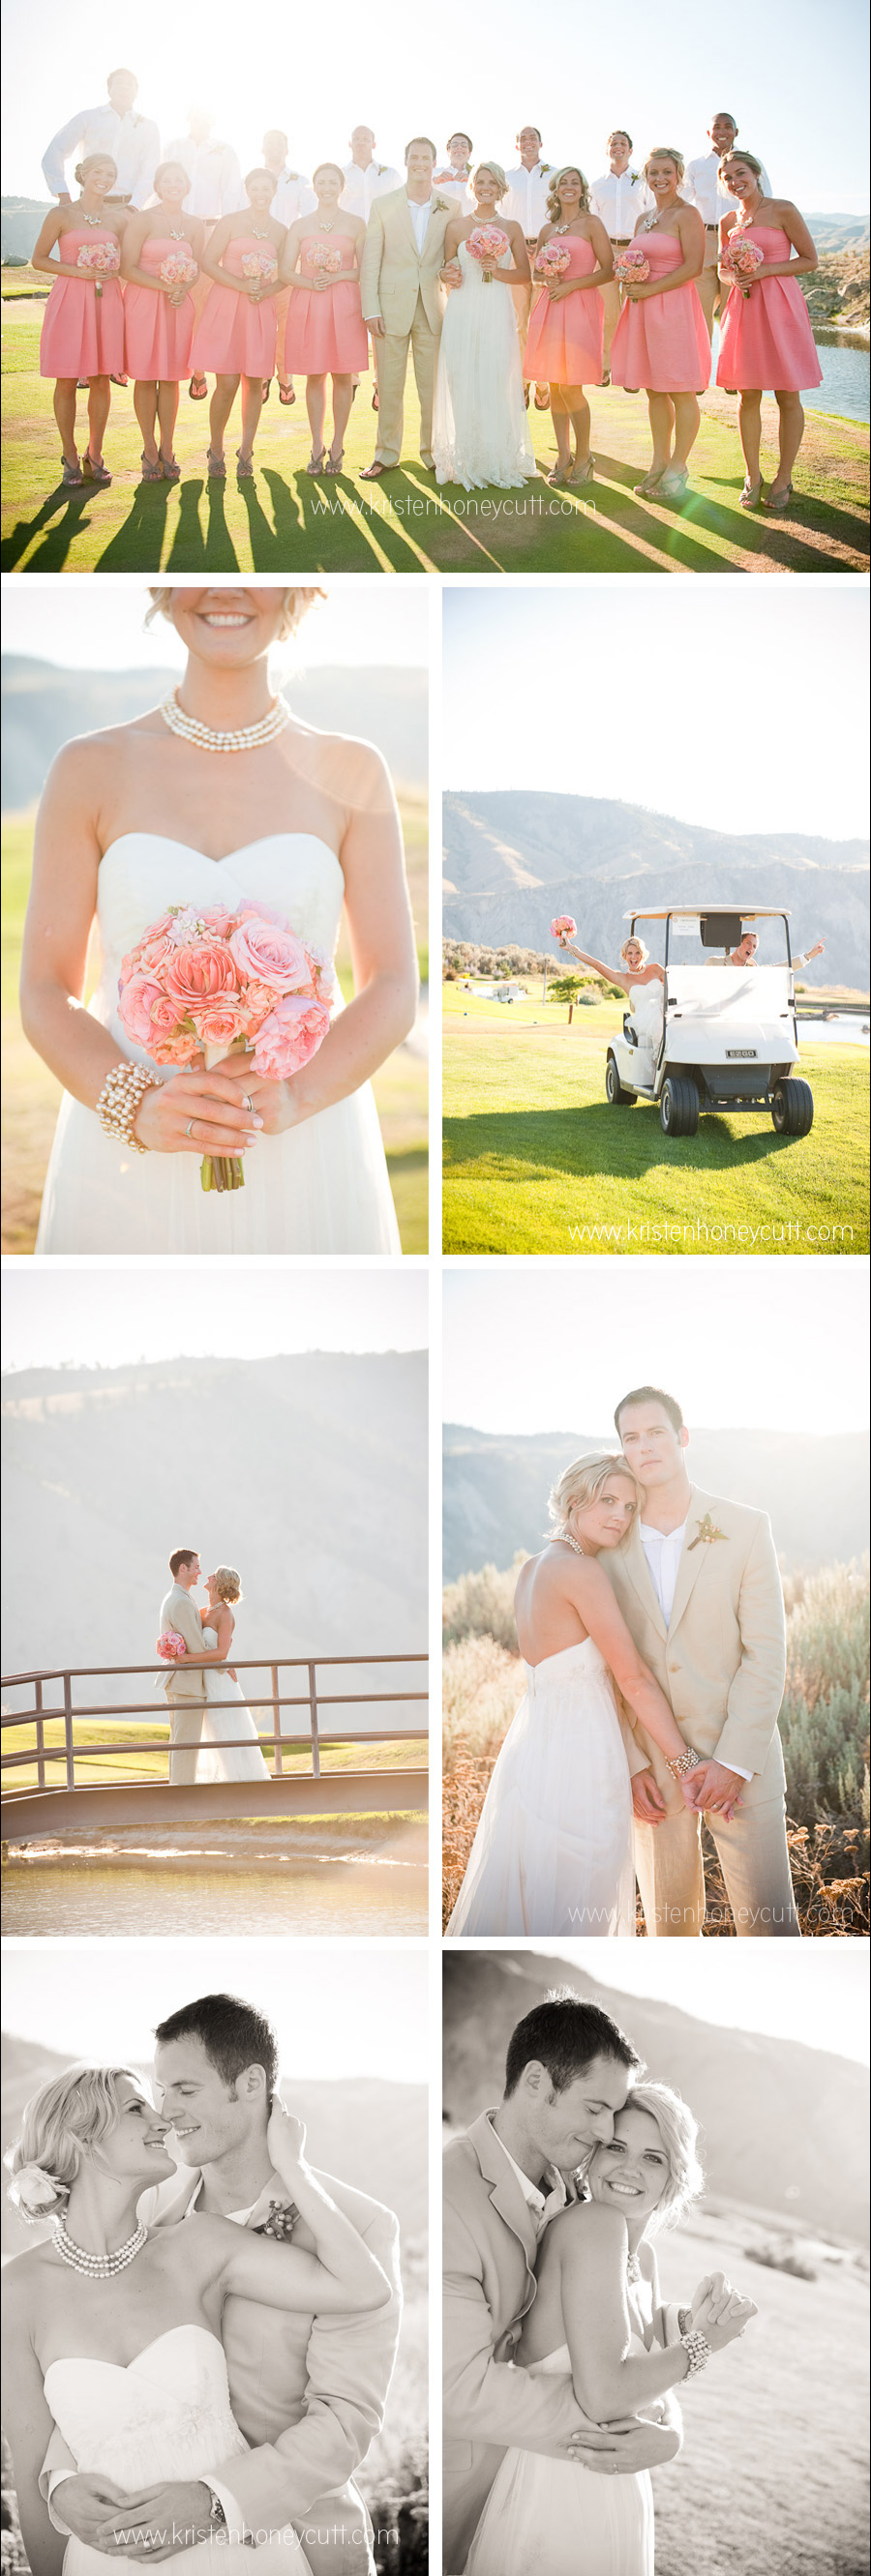 Seattle wedding photographer Kristen Honeycutt photographs the bride and groom.